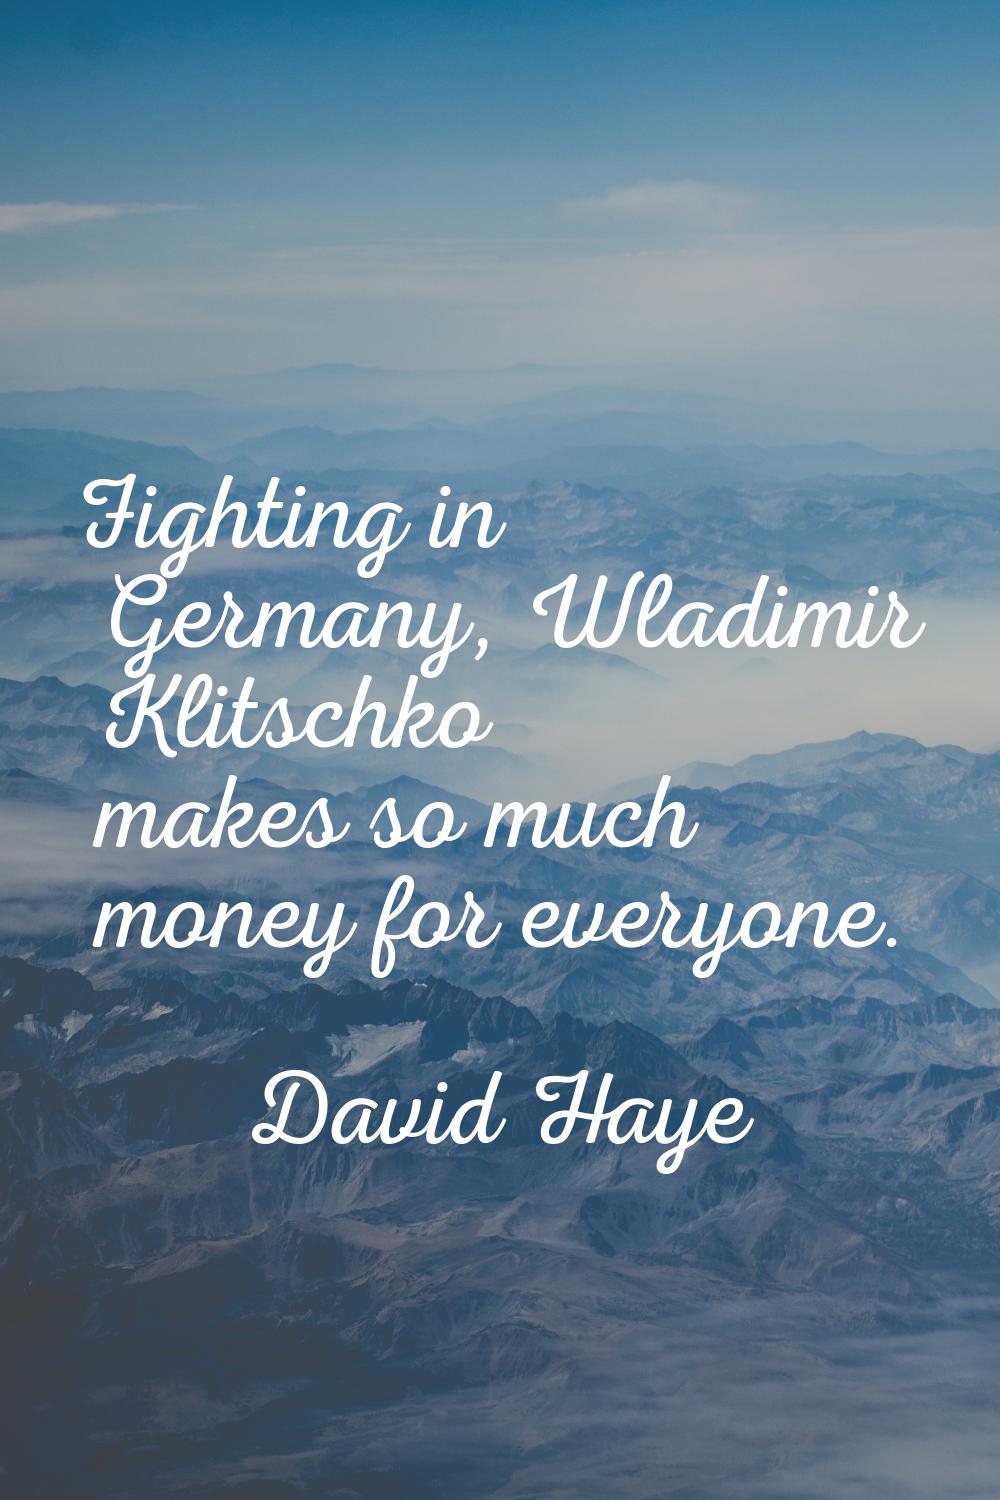 Fighting in Germany, Wladimir Klitschko makes so much money for everyone.